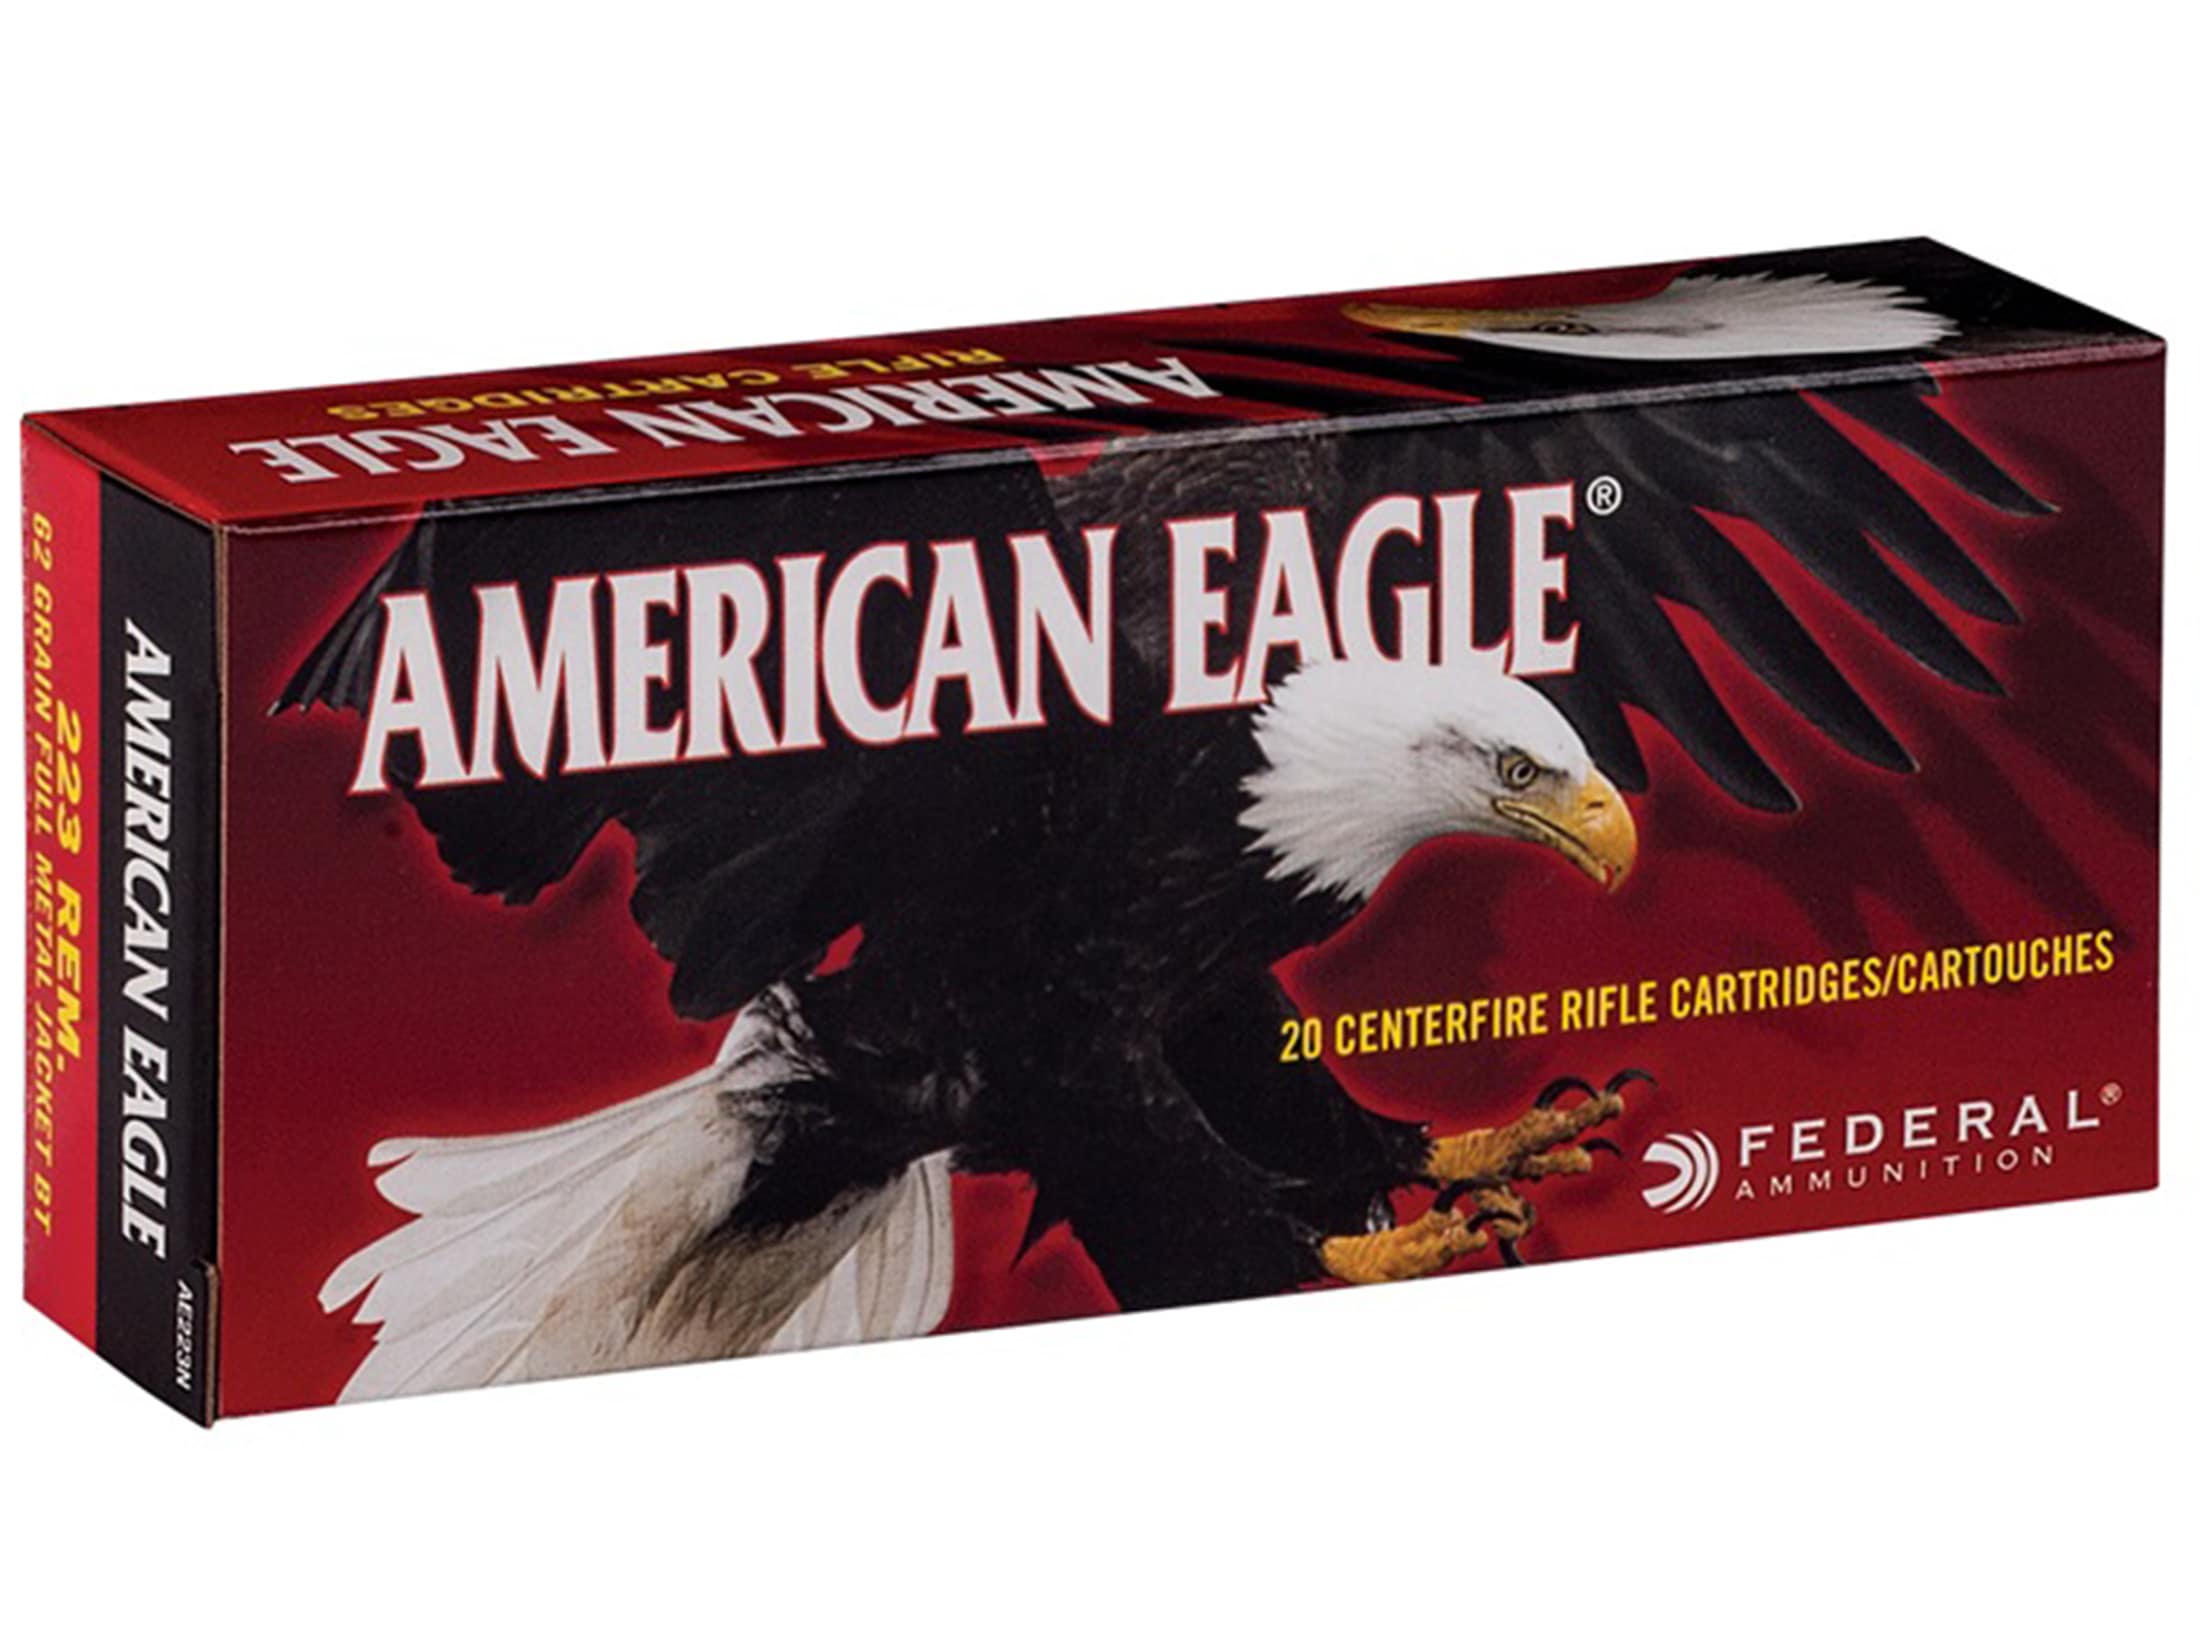 Federal American Eagle Ammunition 223 Remington 62 Grain Full Metal Jacket